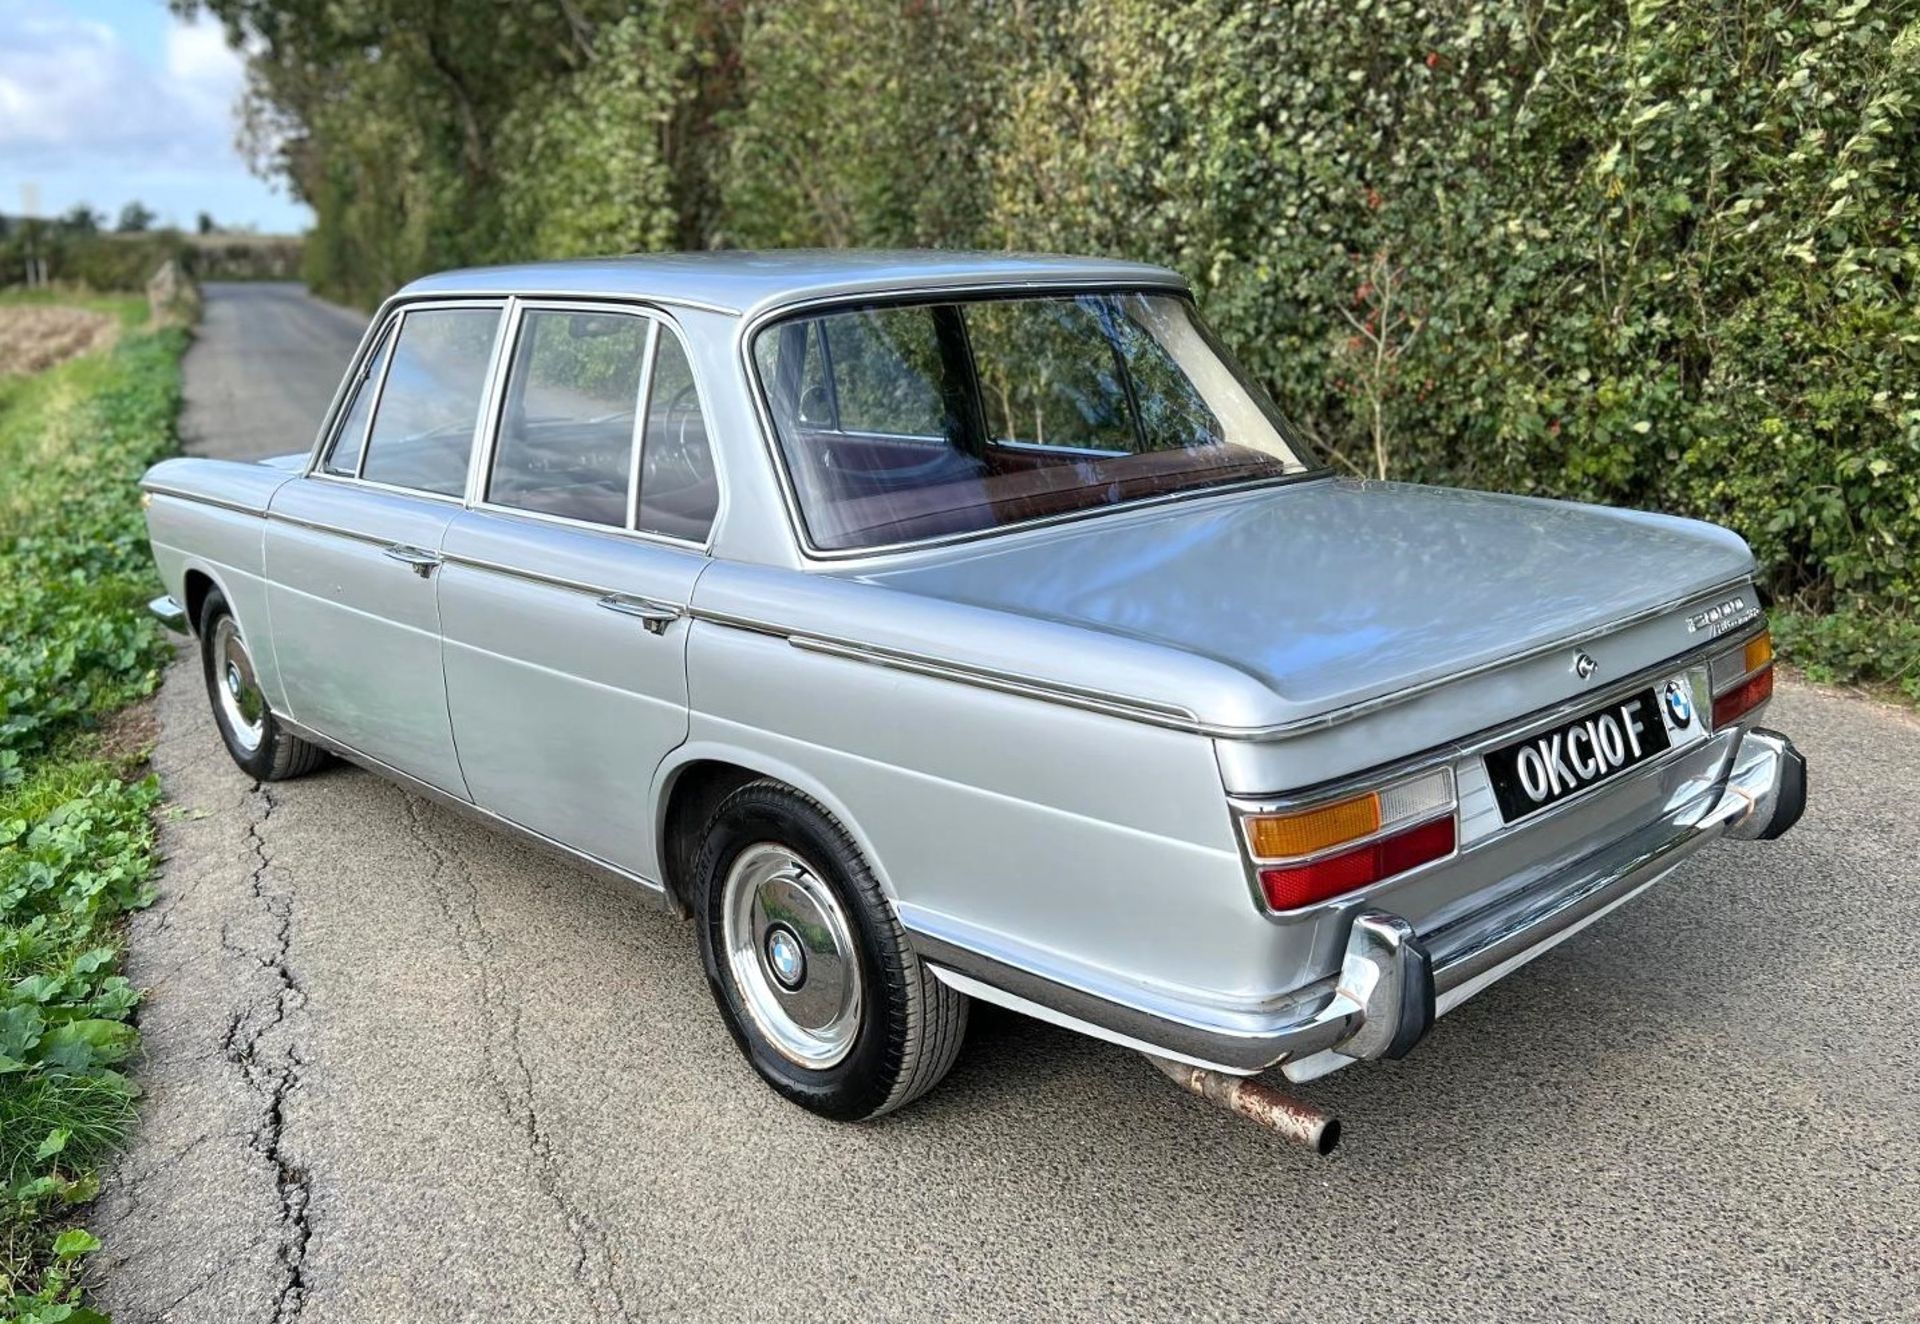 1968 BMW 2000 NEU KLASSE Registration Number: OKC 10F Chassis Number: 1225247 Recorded Mileage: 28, - Image 5 of 18